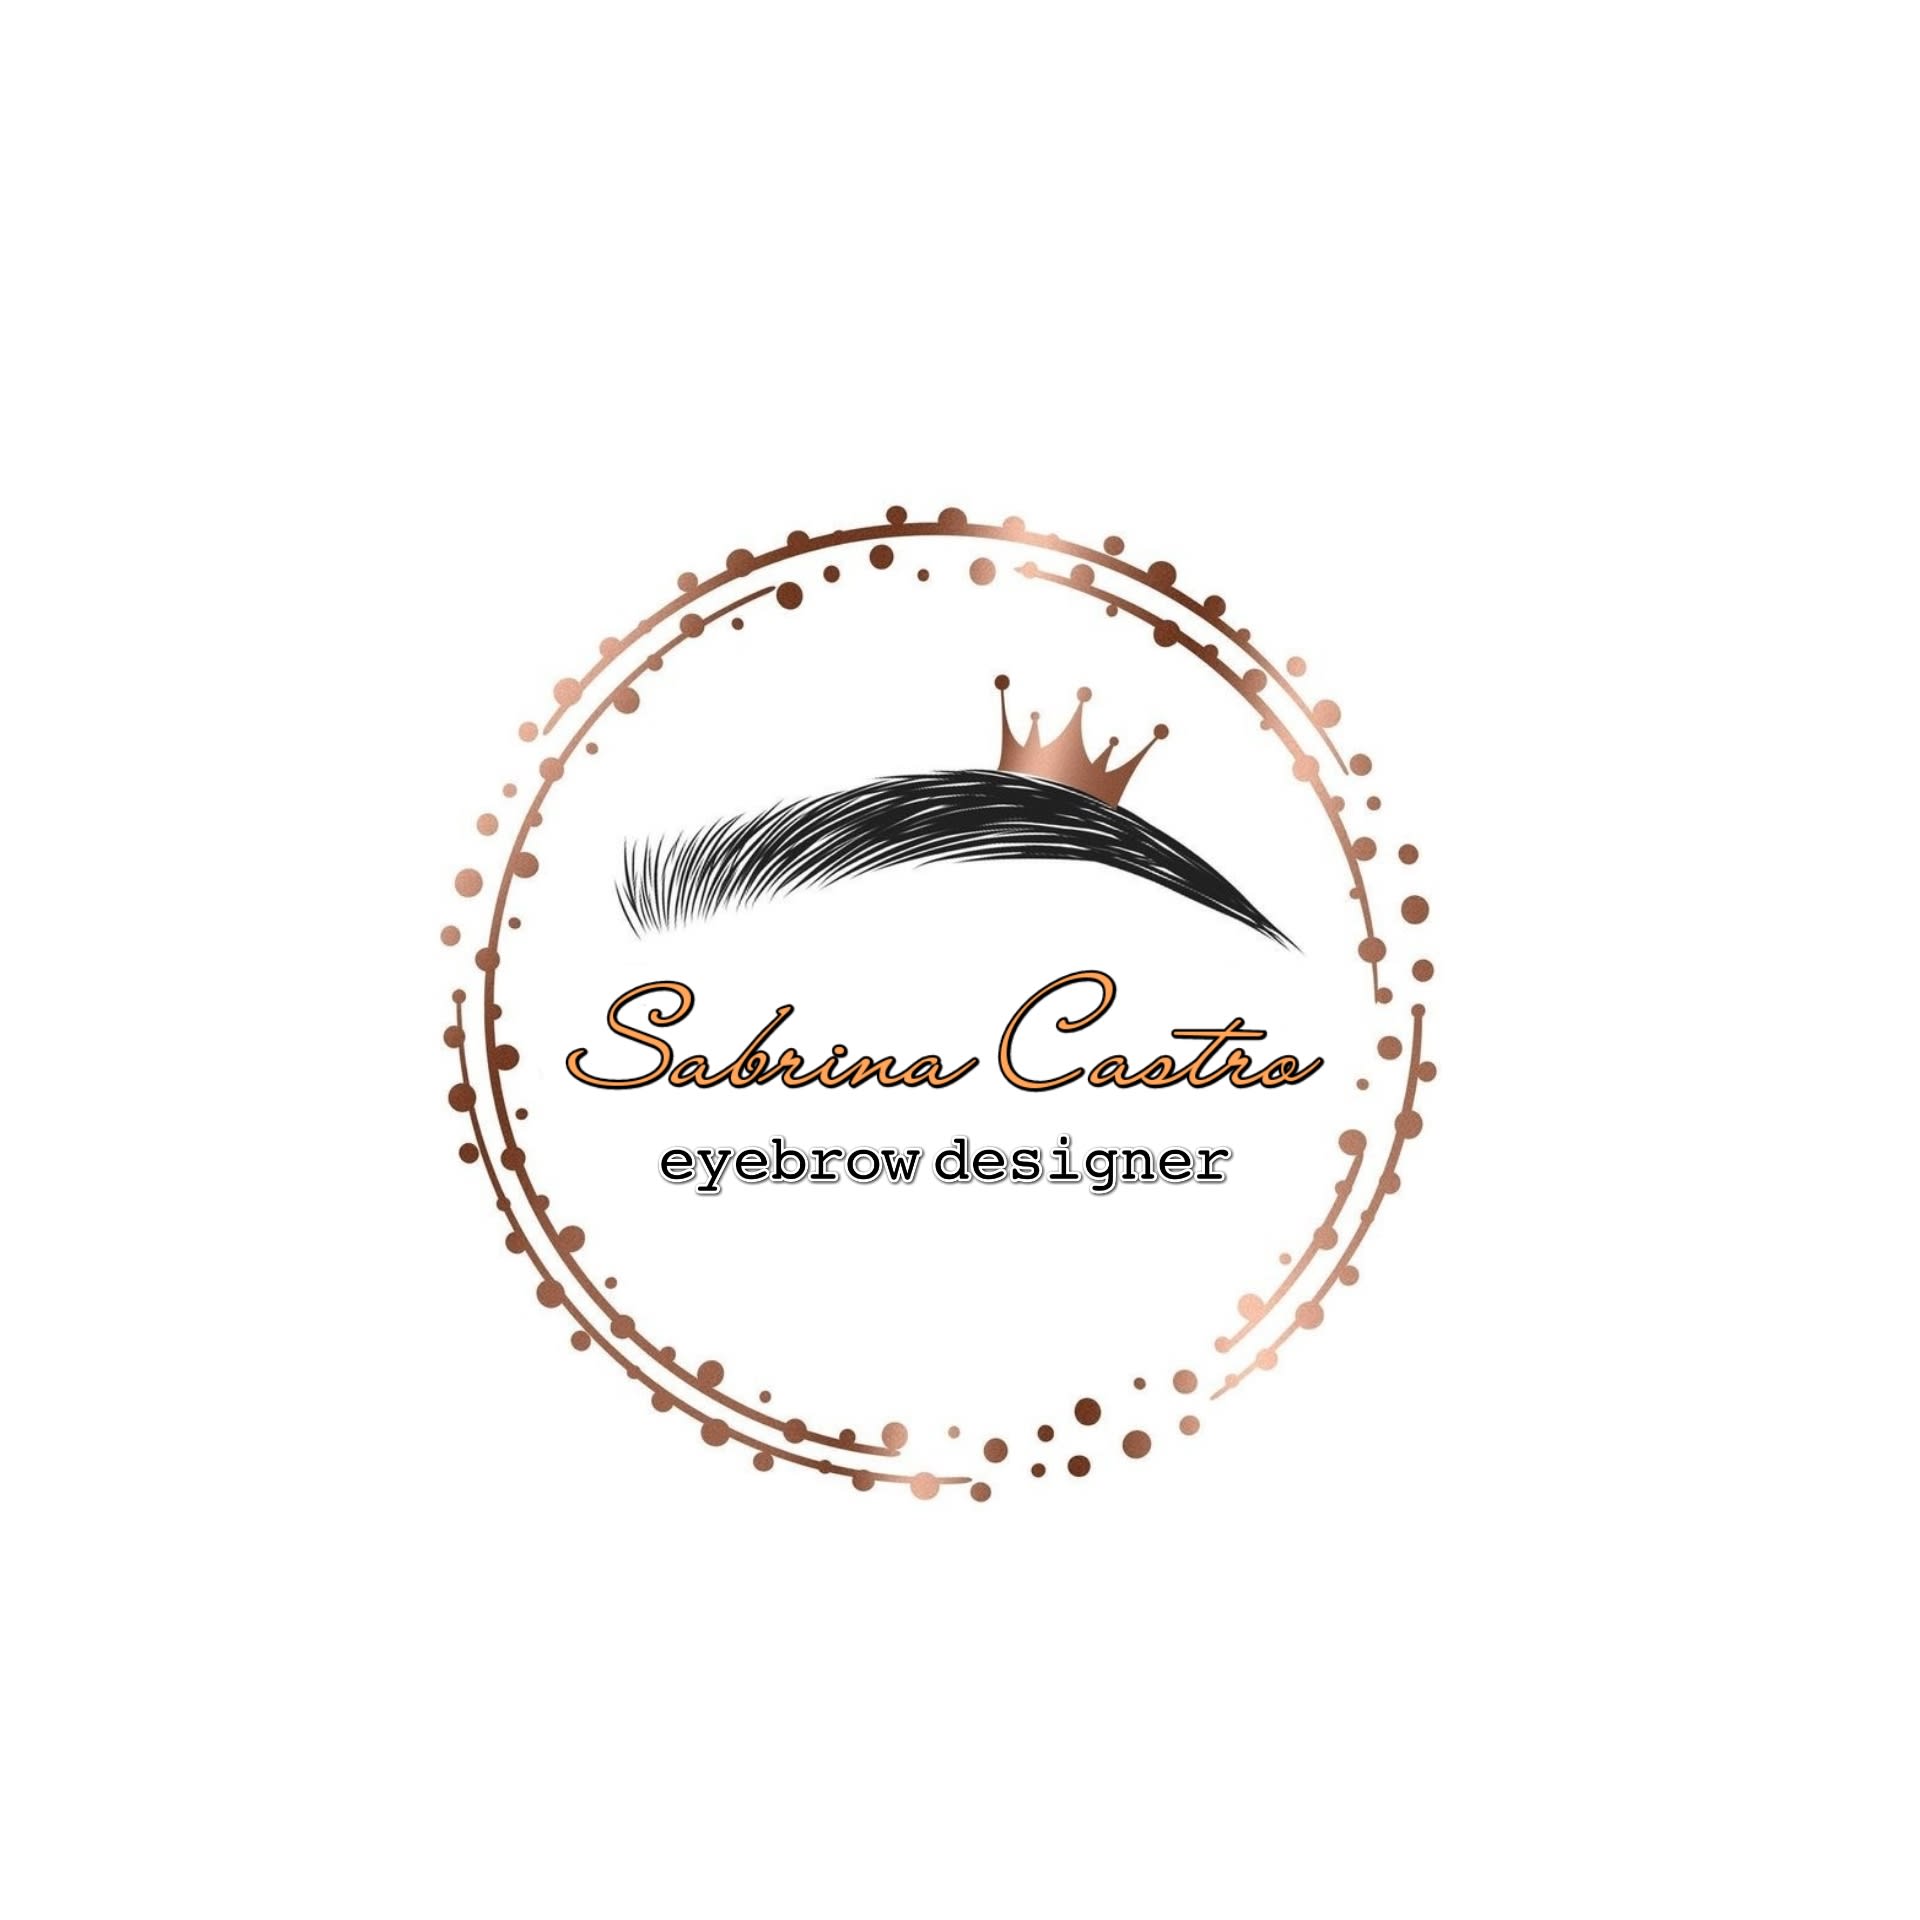 Sabrina Castro Eyebrow Designer